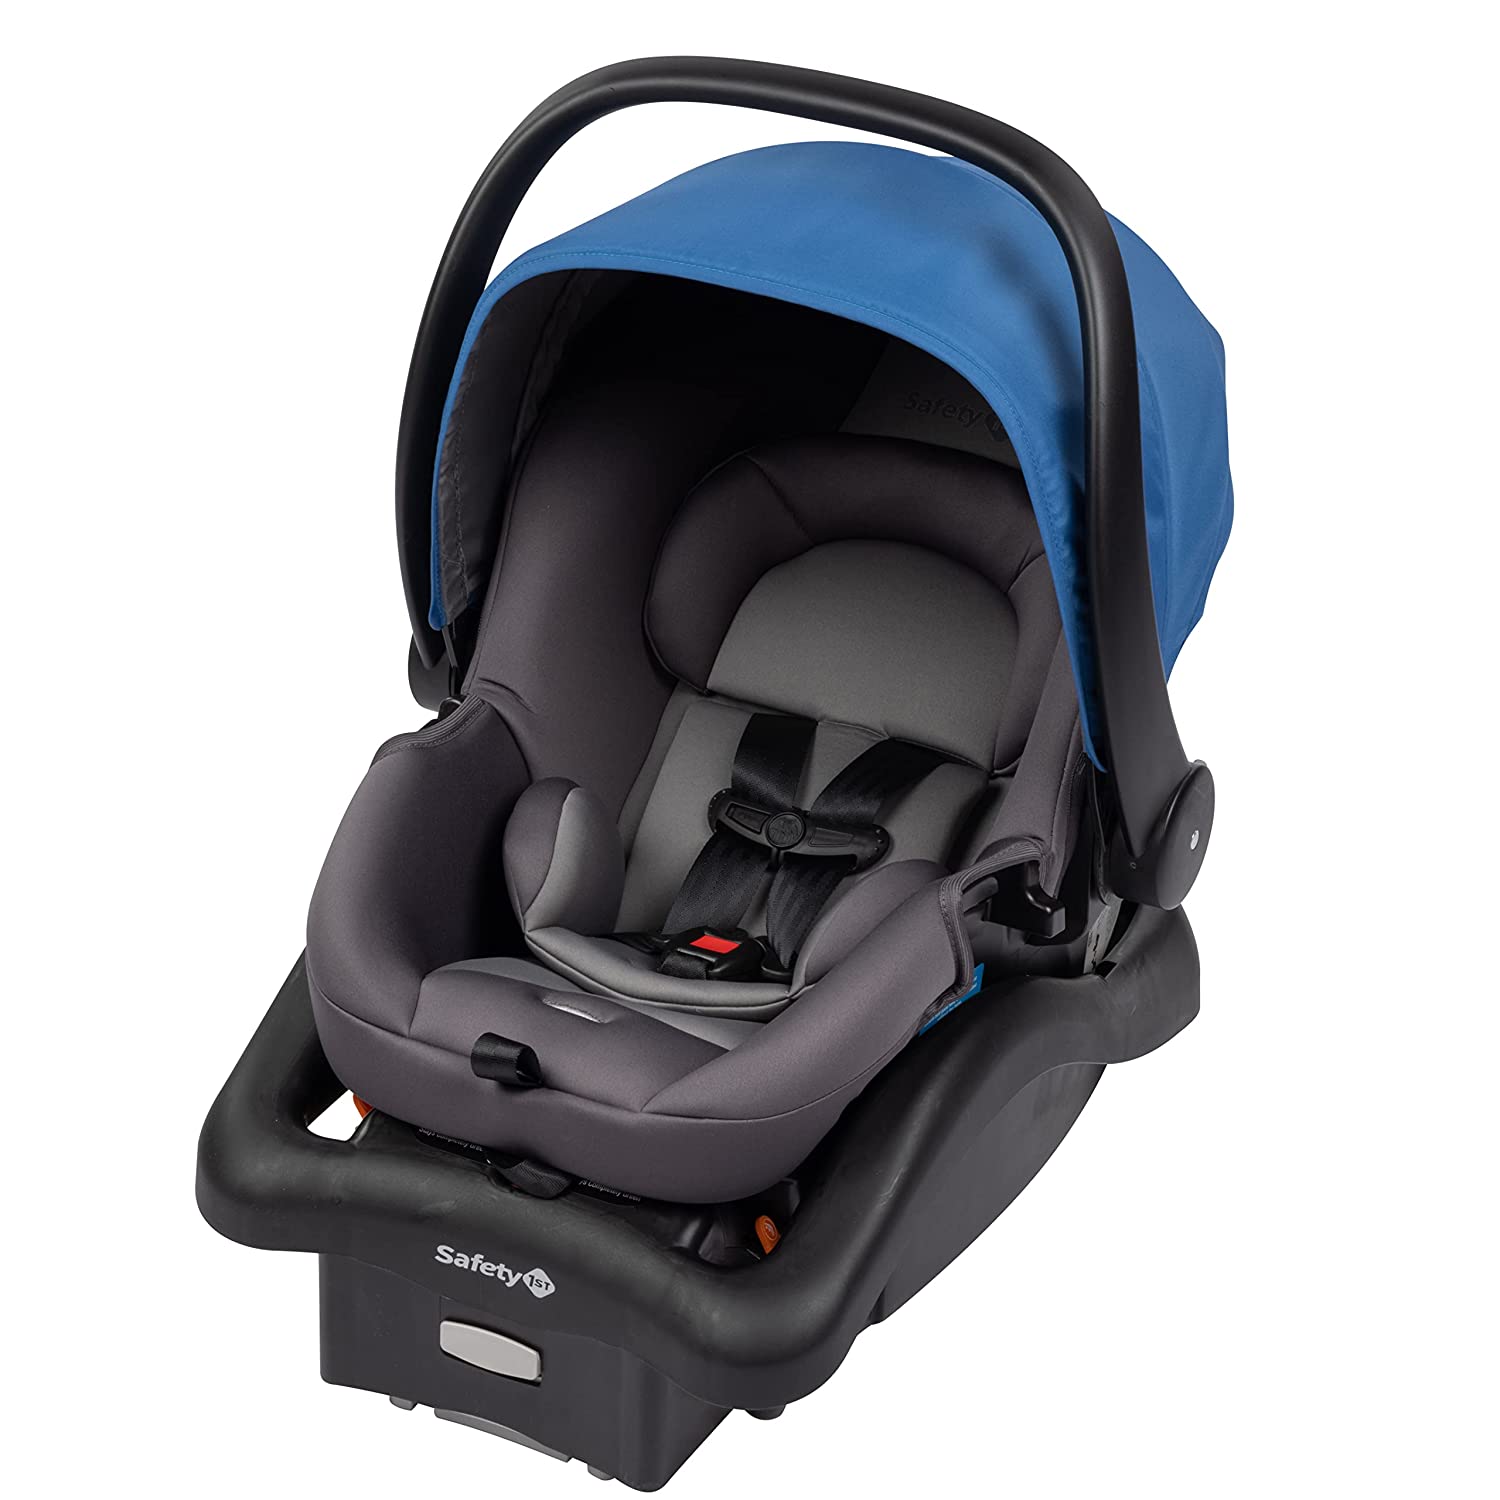 RECALL MaxiCosi & Safety 1st Infant Car Seats CarseatBlog